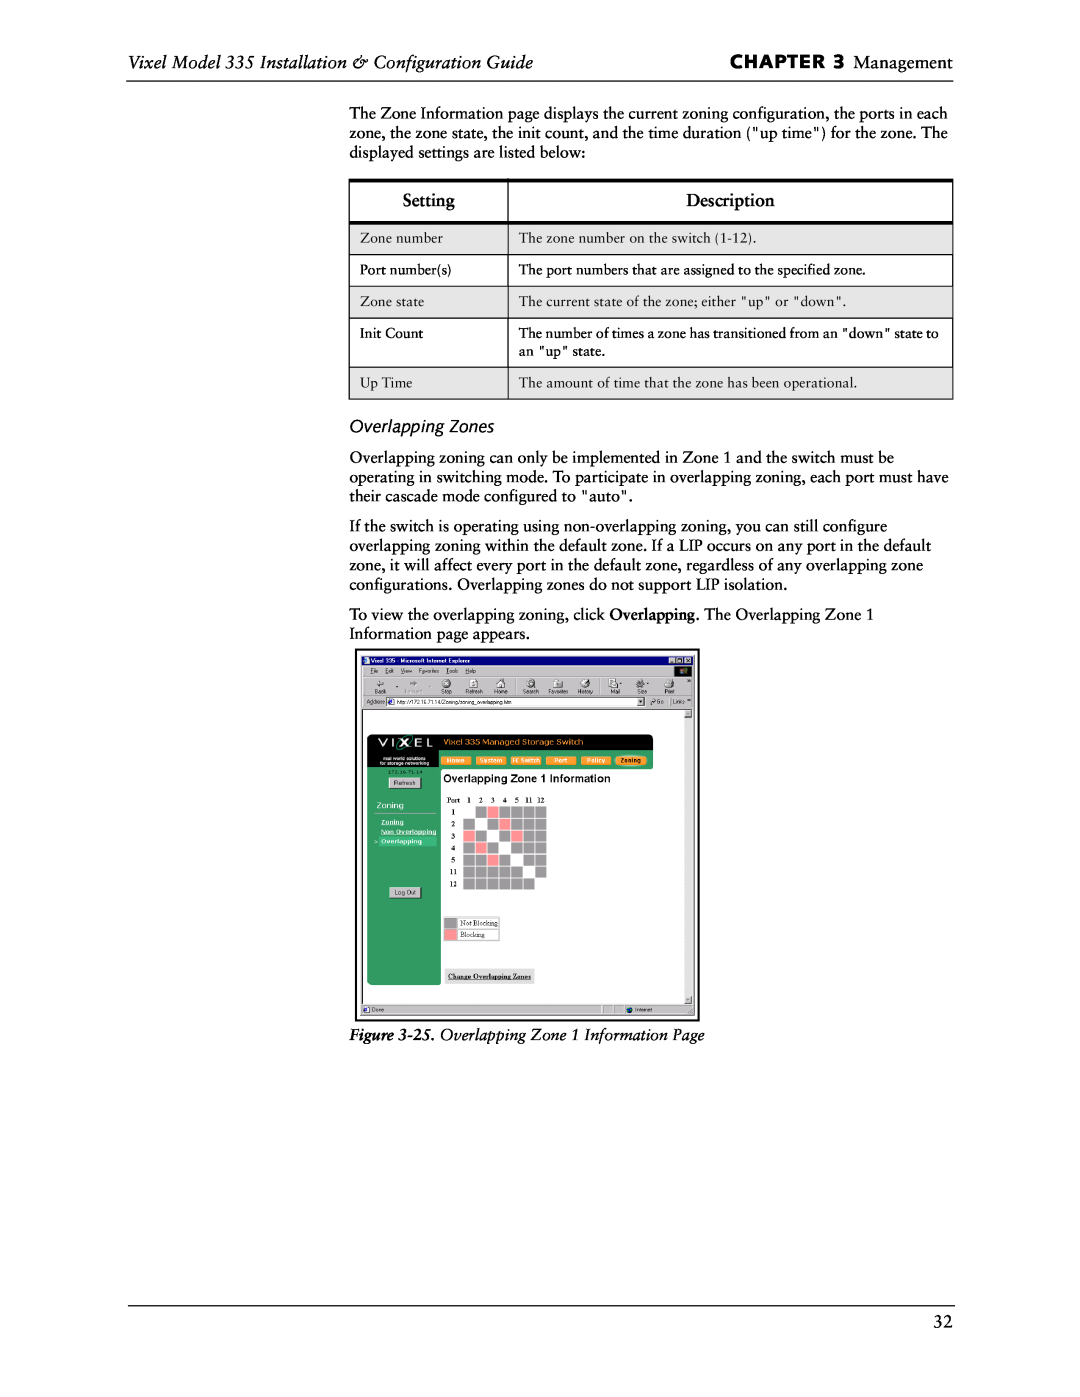 Vixel manual Management, Vixel Model 335 Installation & Configuration Guide, Setting, Description, Overlapping Zones 